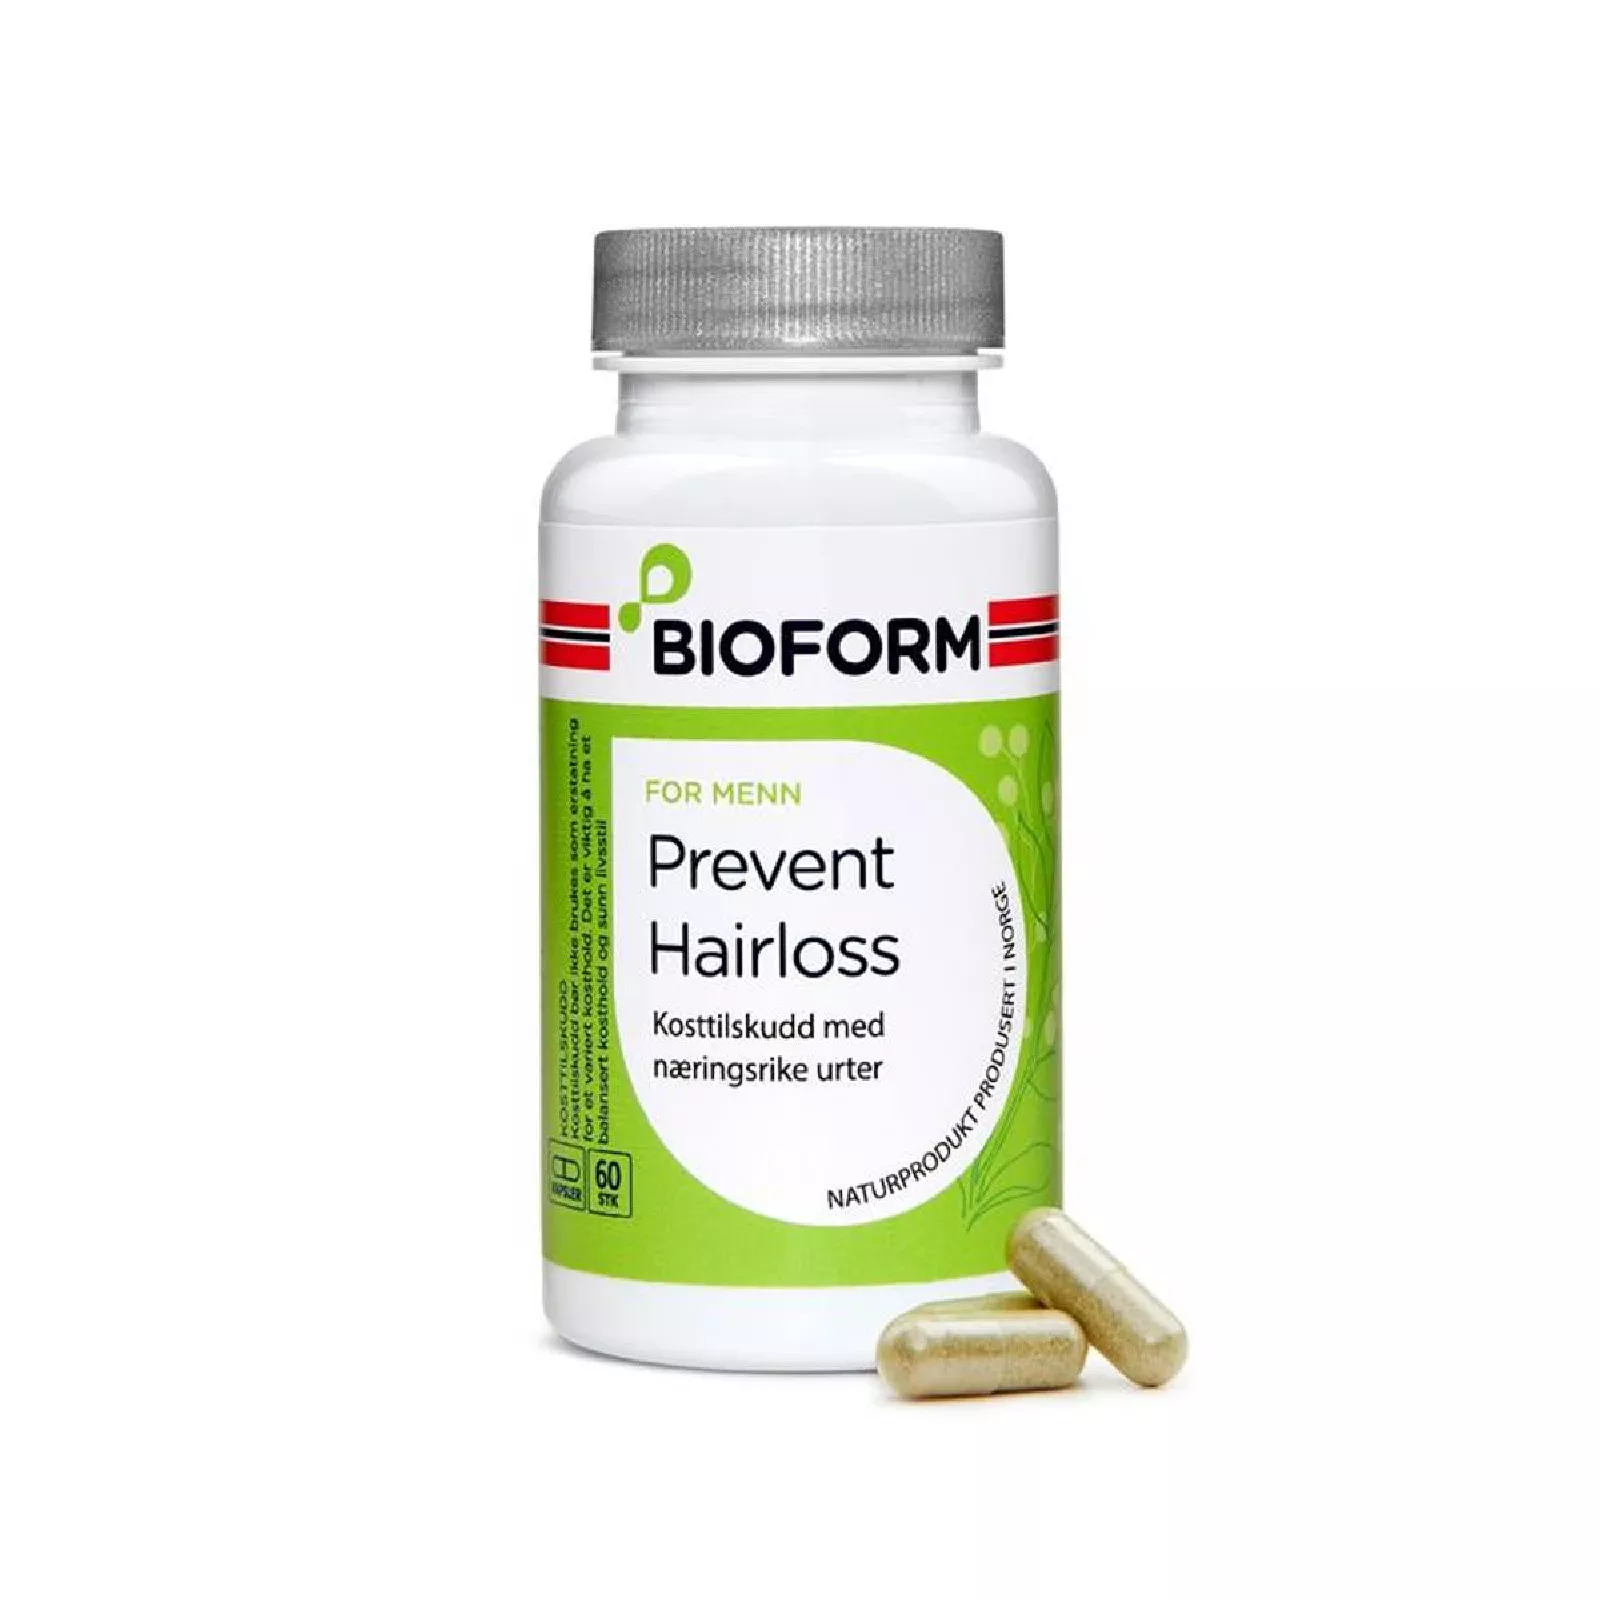 Prevent hairloss 2 w1200h1200